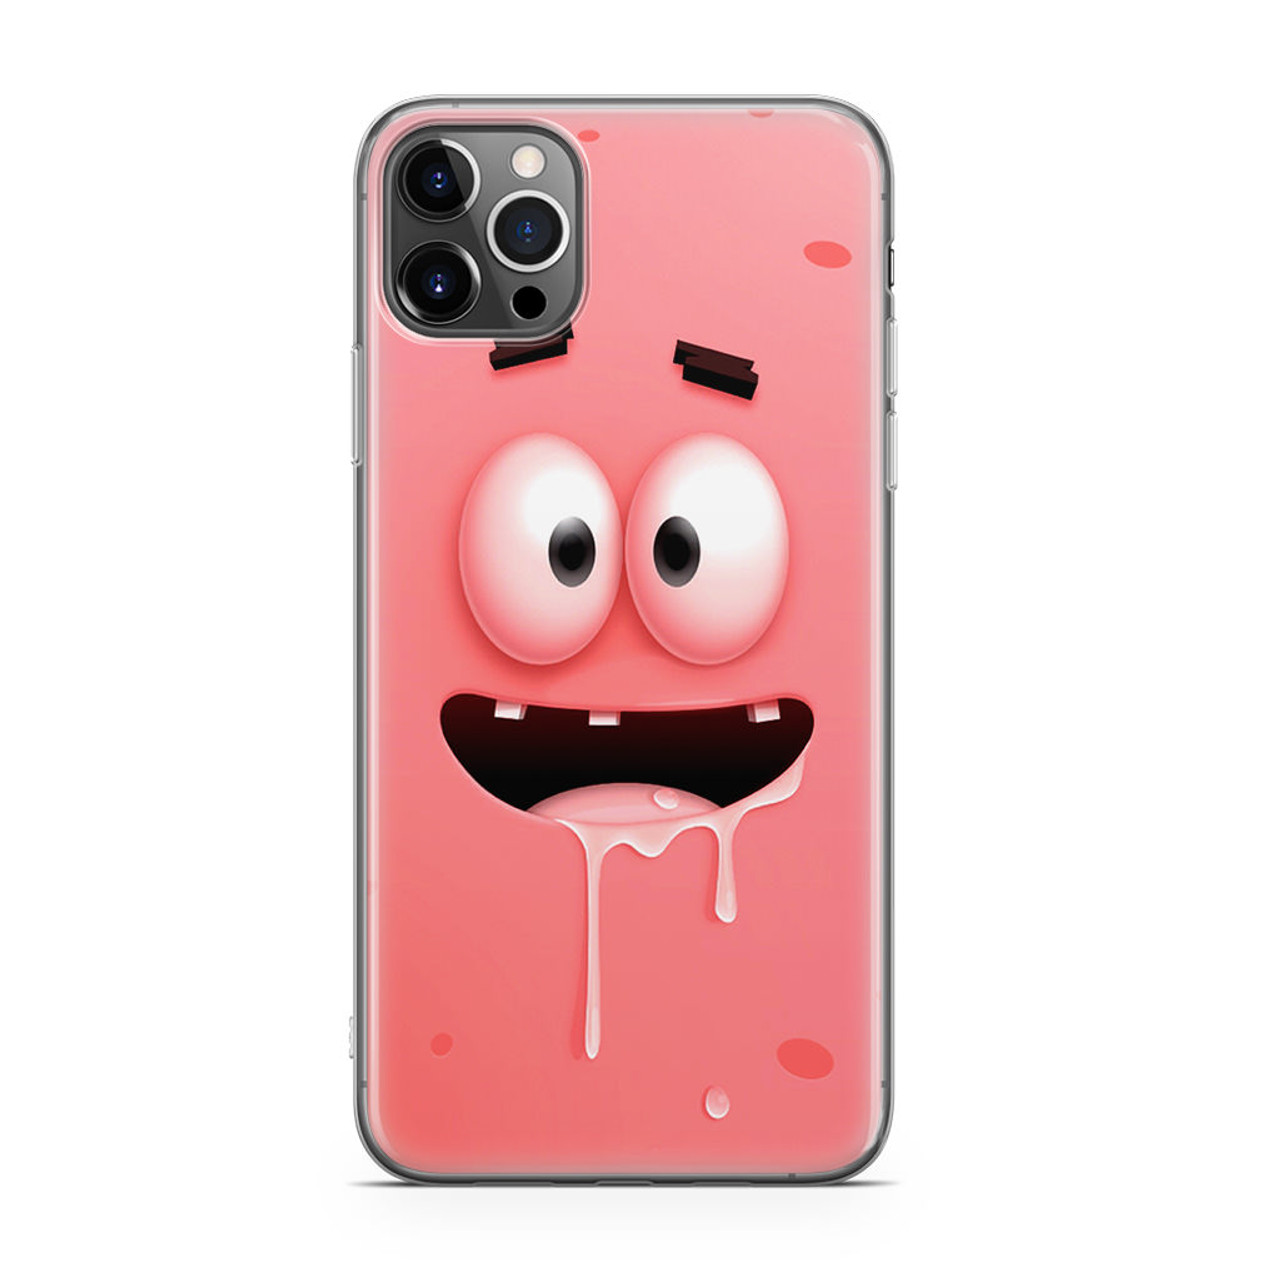 Spongebob Patrick Star iPhone 12 Pro Max Case - CASESHUNTER